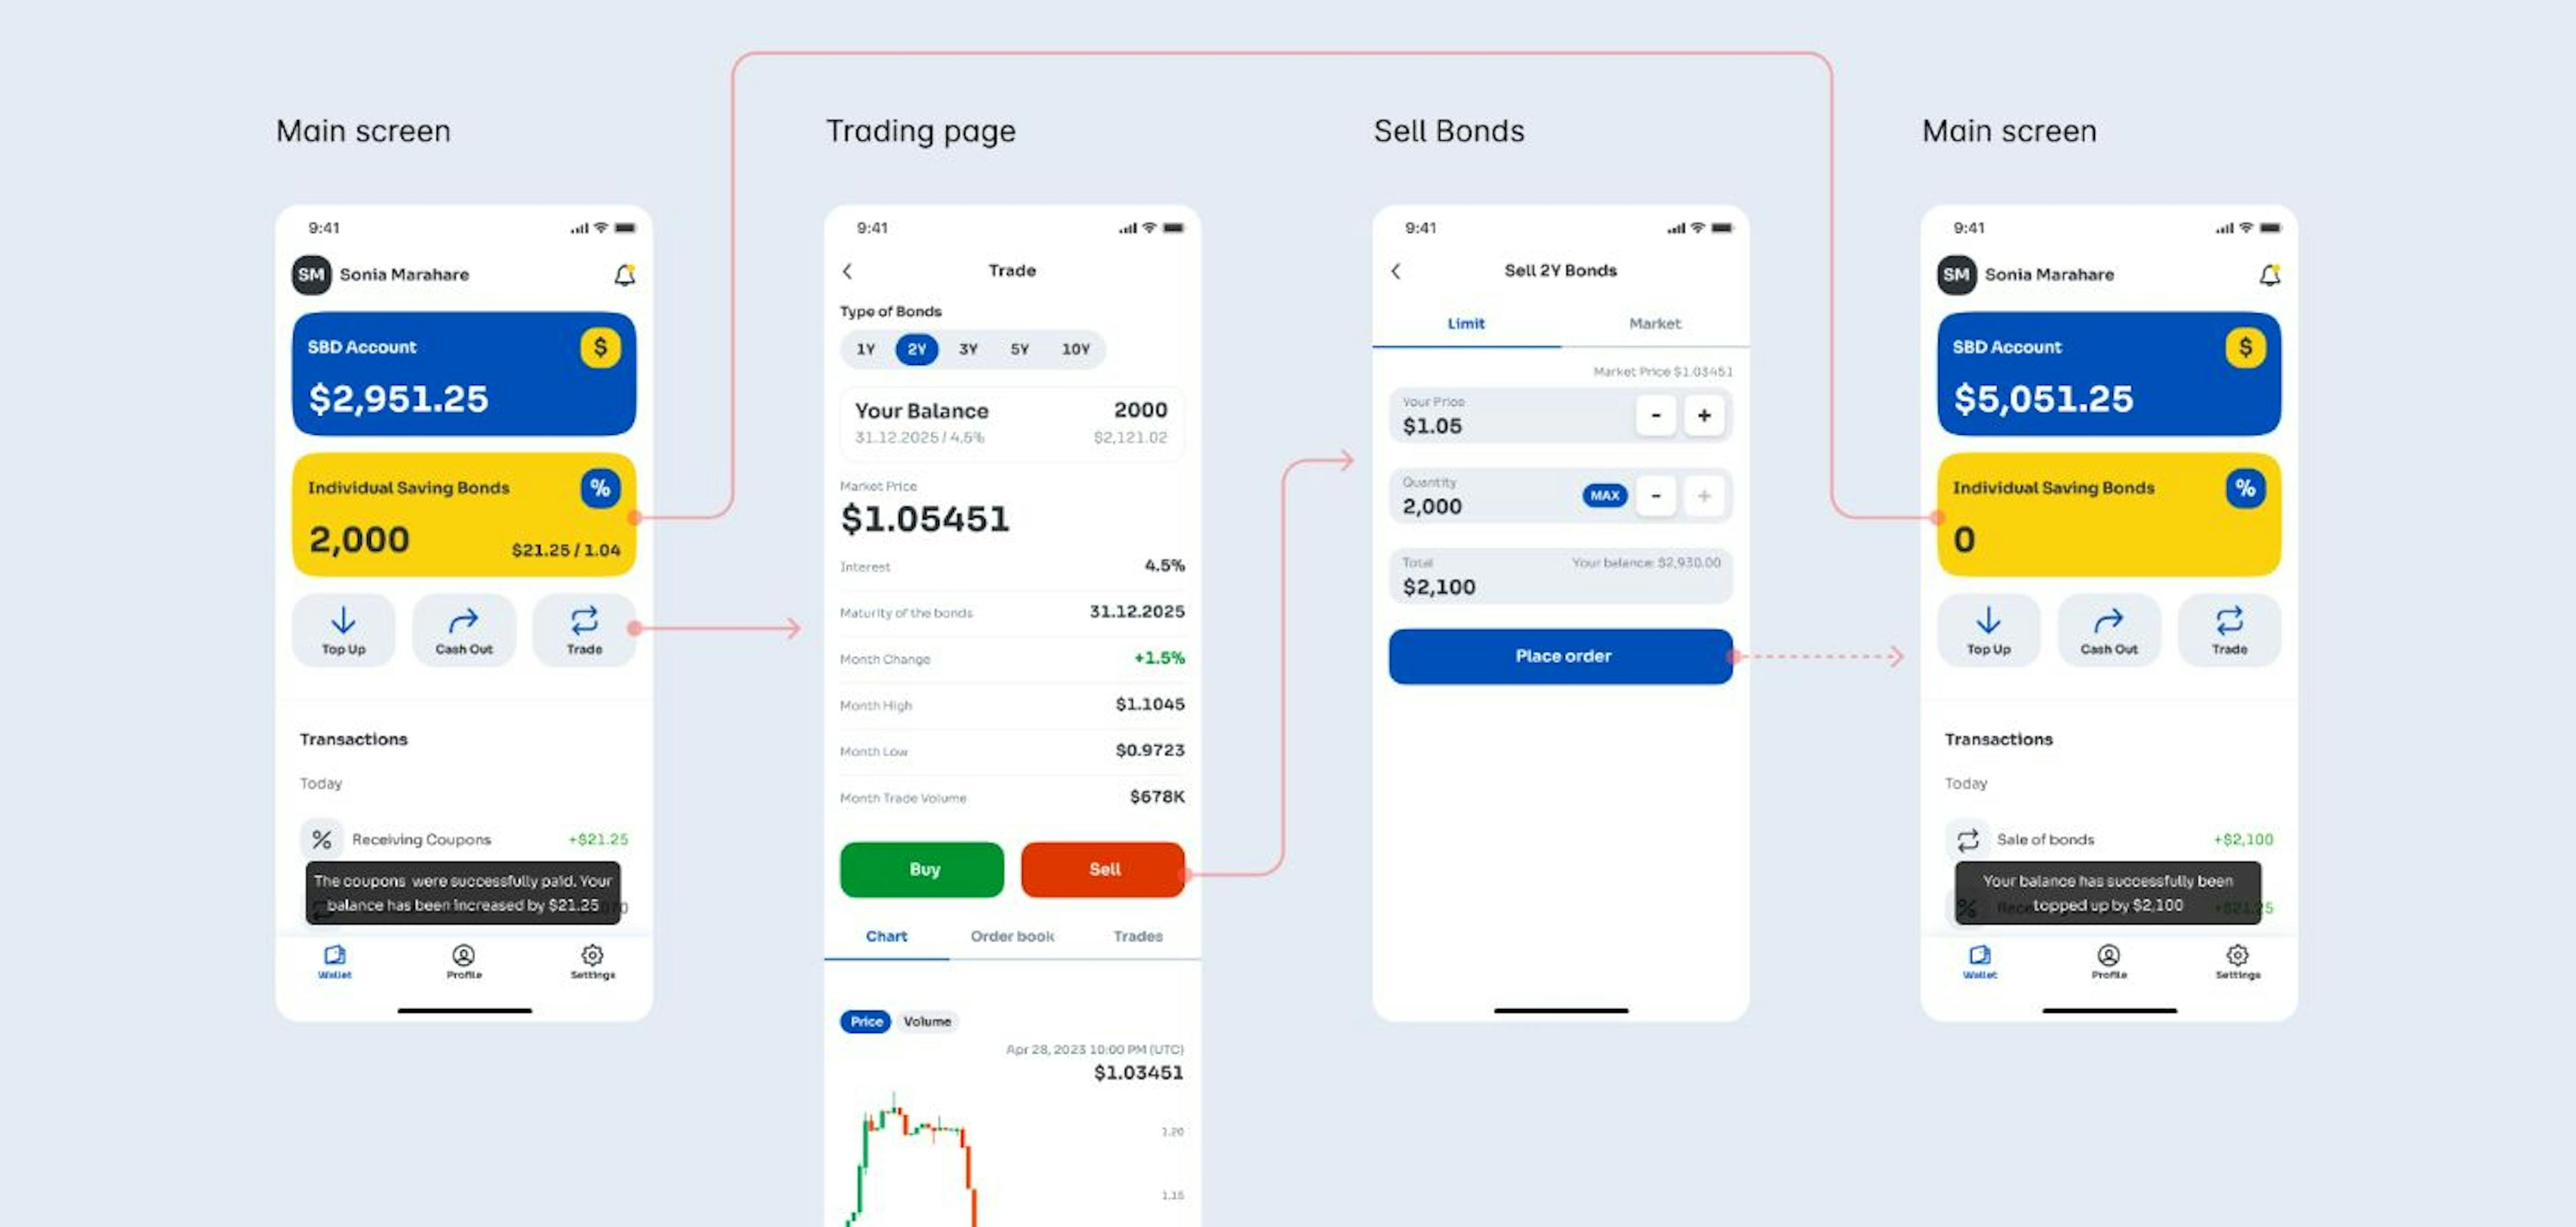 Bonds sale in the app